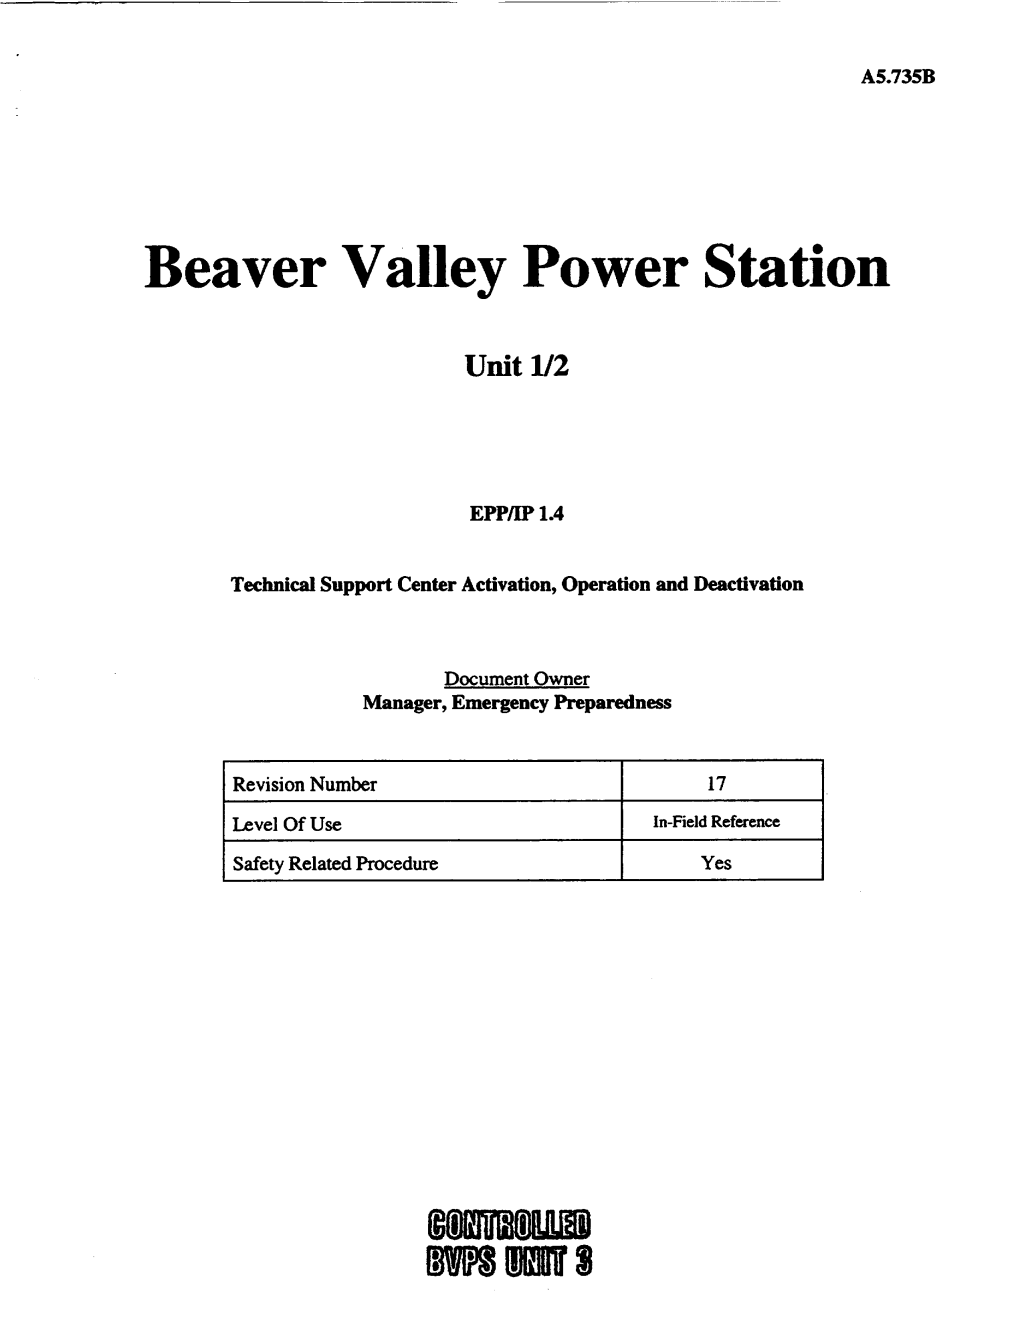 Revised Beaver Valley Power Station Emergency Preparedness Plan